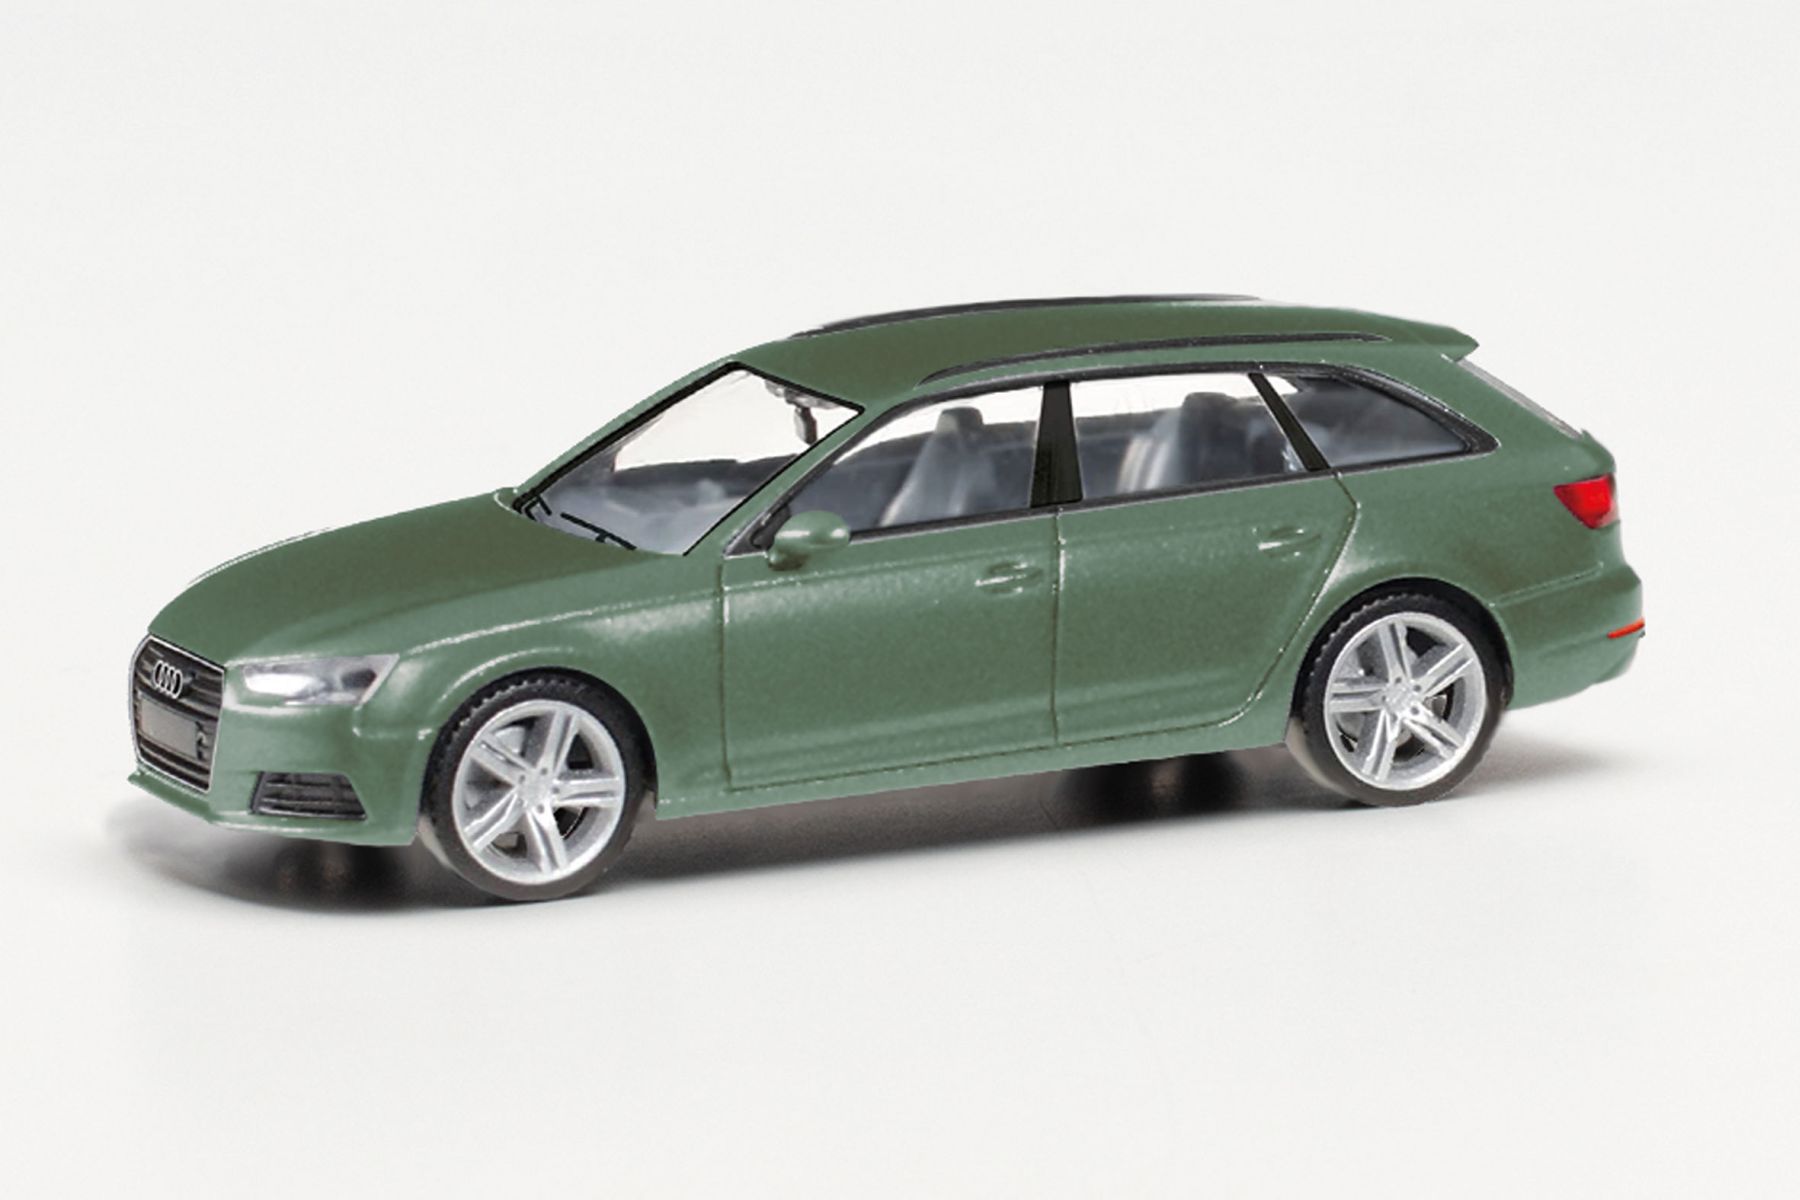 Herpa 038577-004 - Audi A4 Avant, distriktgrün metallic